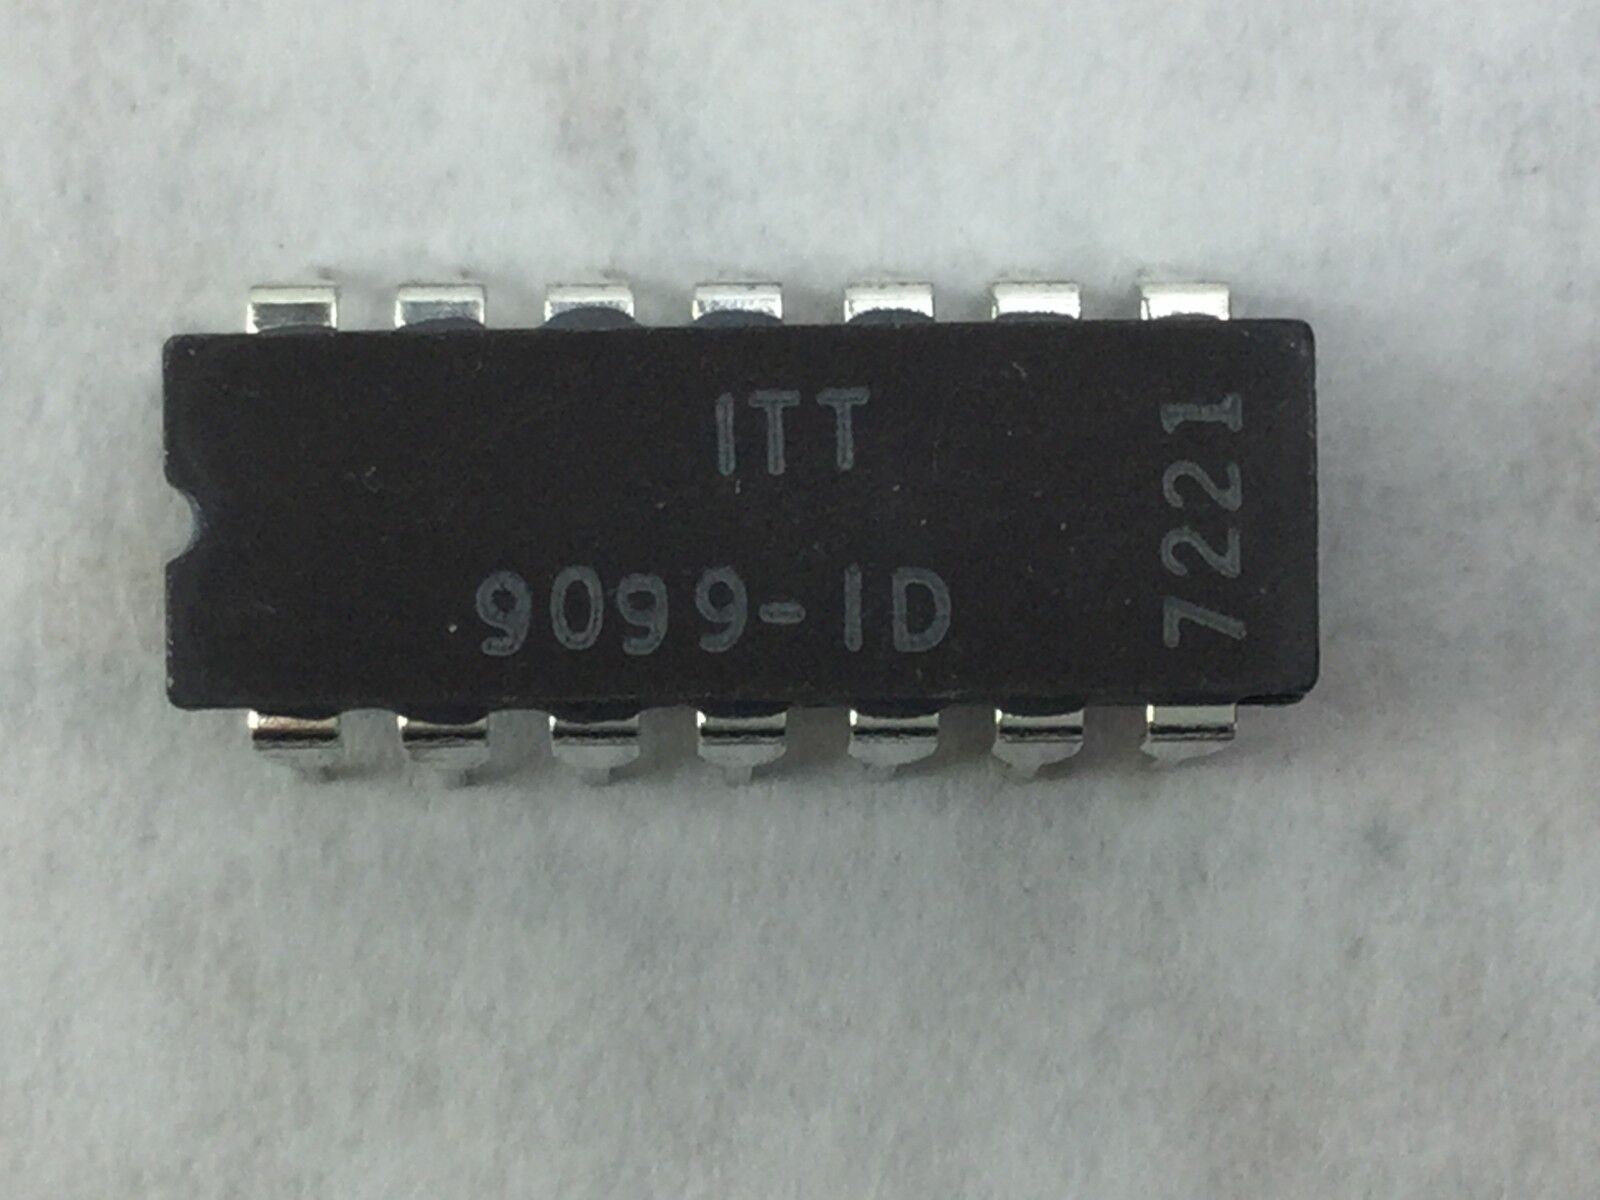 Genuine ITT 9099-1D Integrated Circuits  Lot of 30